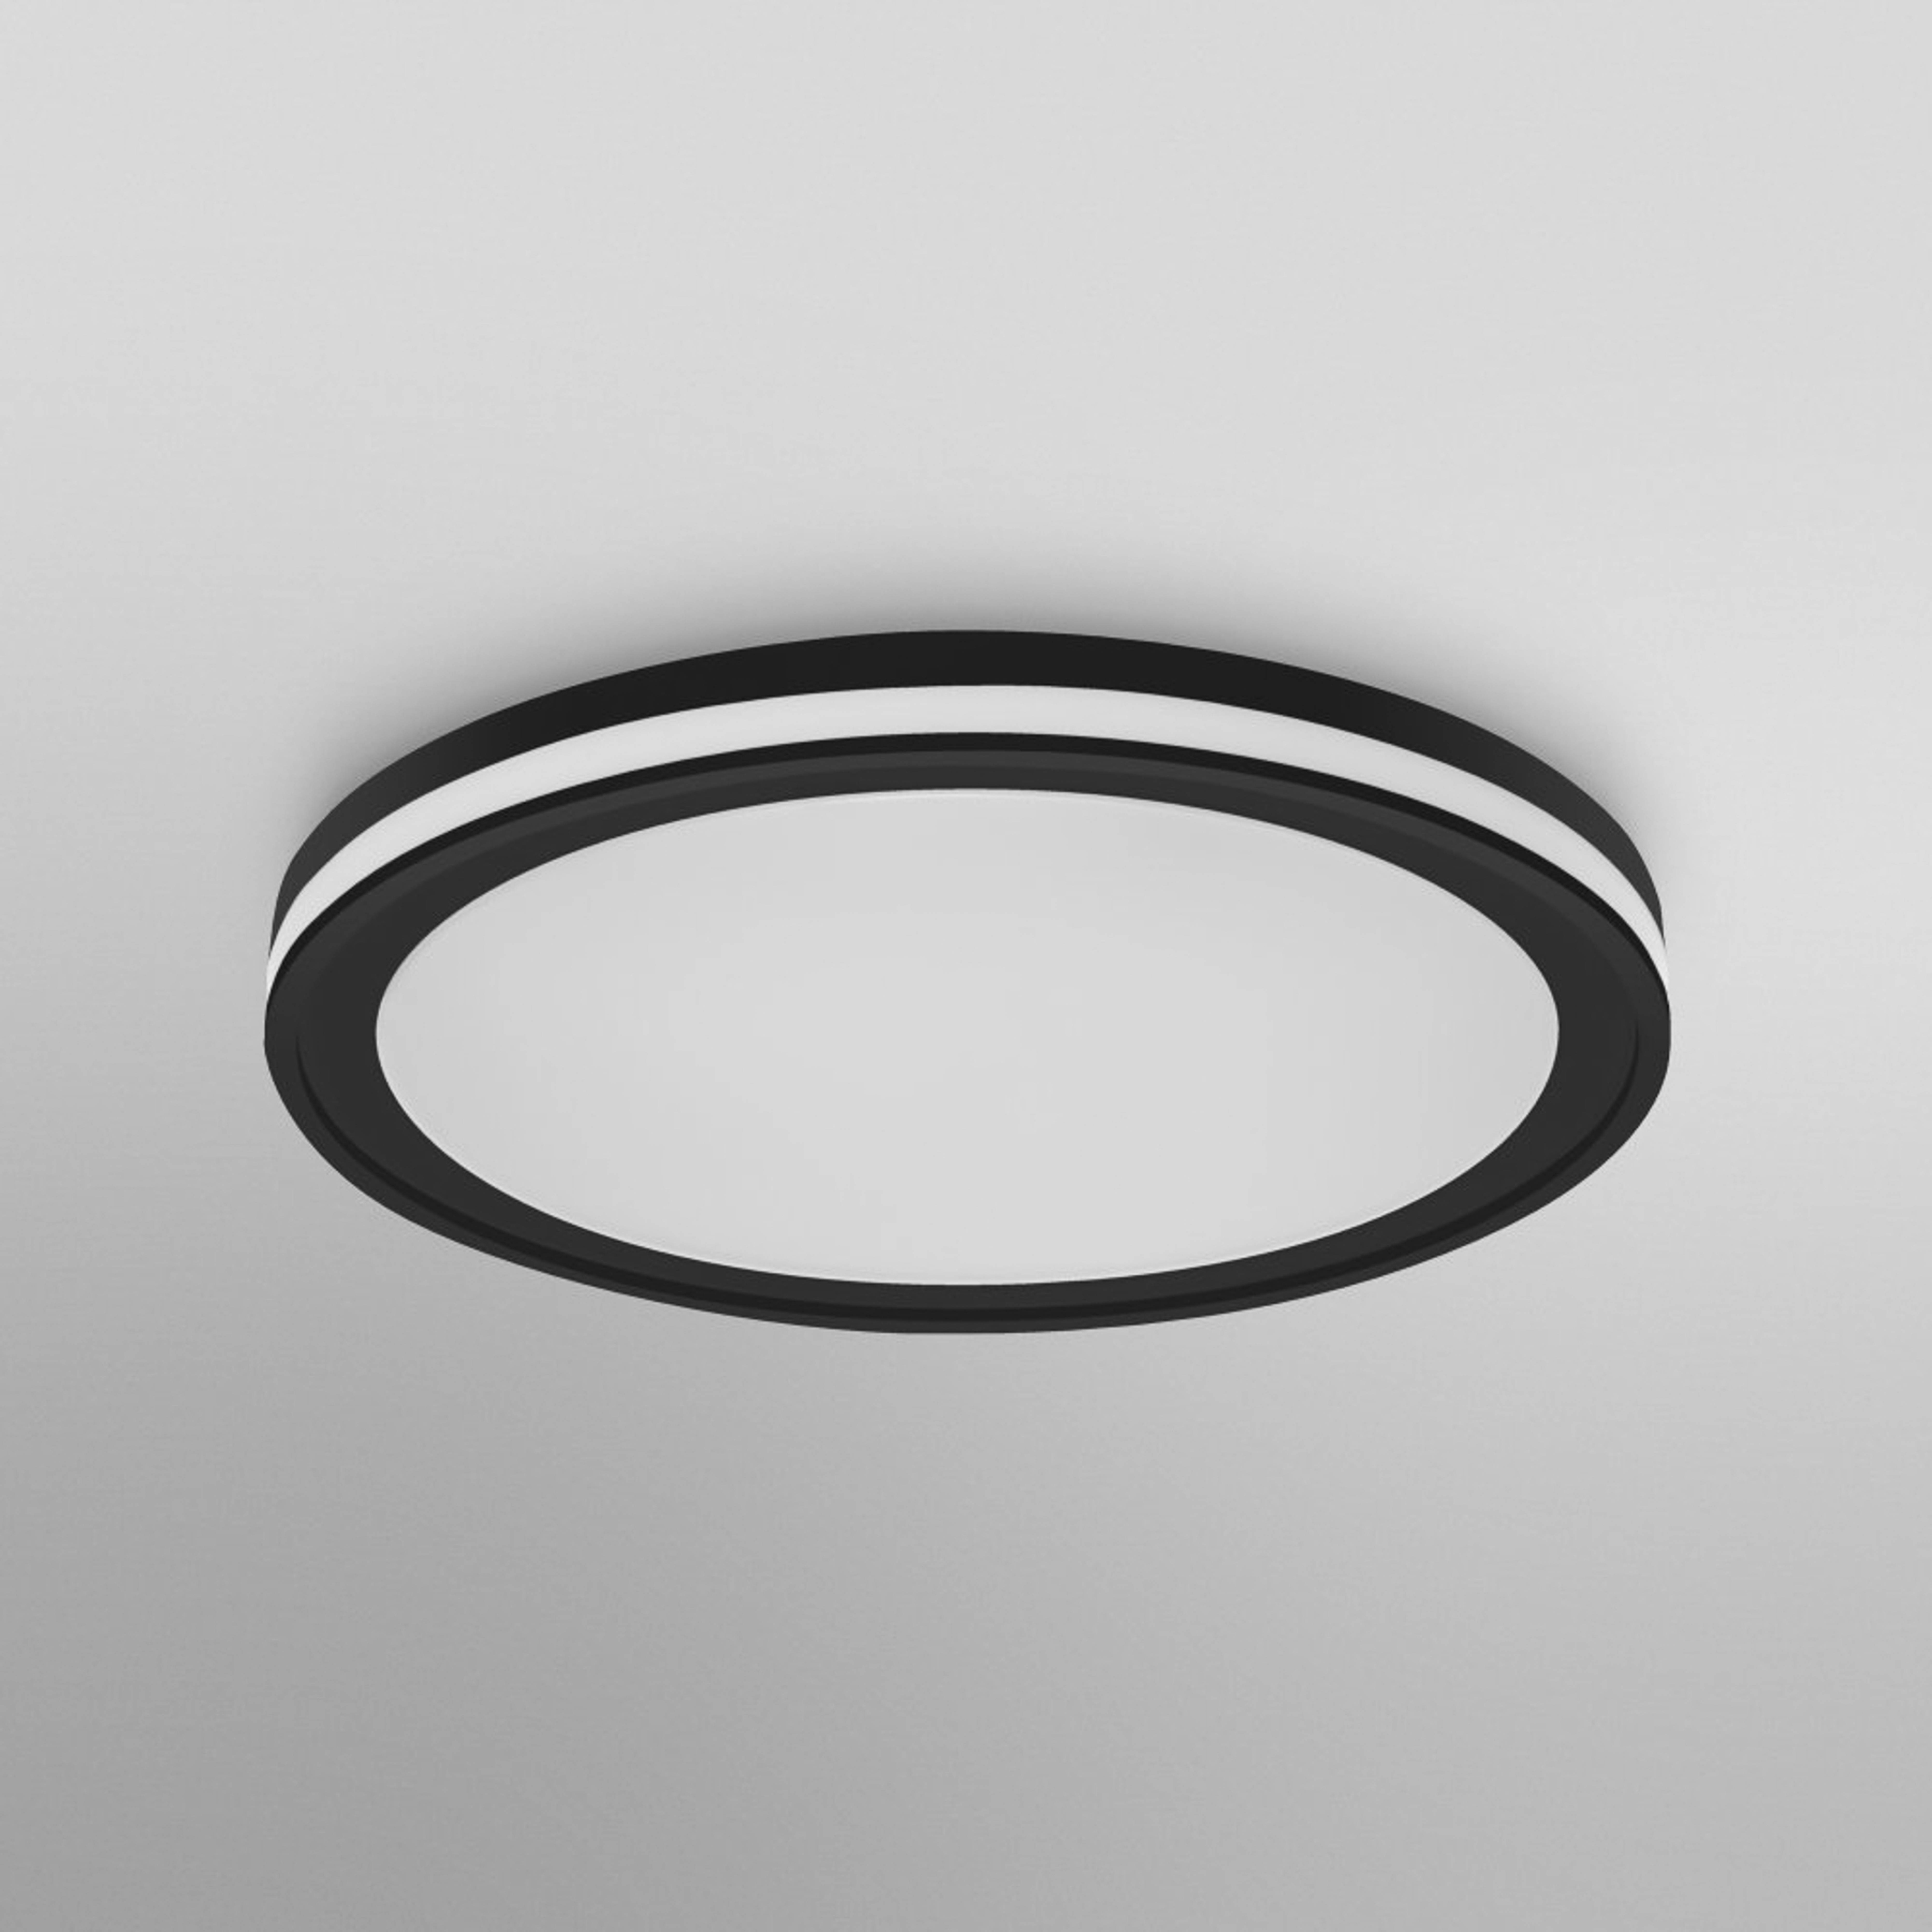 LEDVANCE SMART+ WiFi Orbis Circle CCT RGB noir